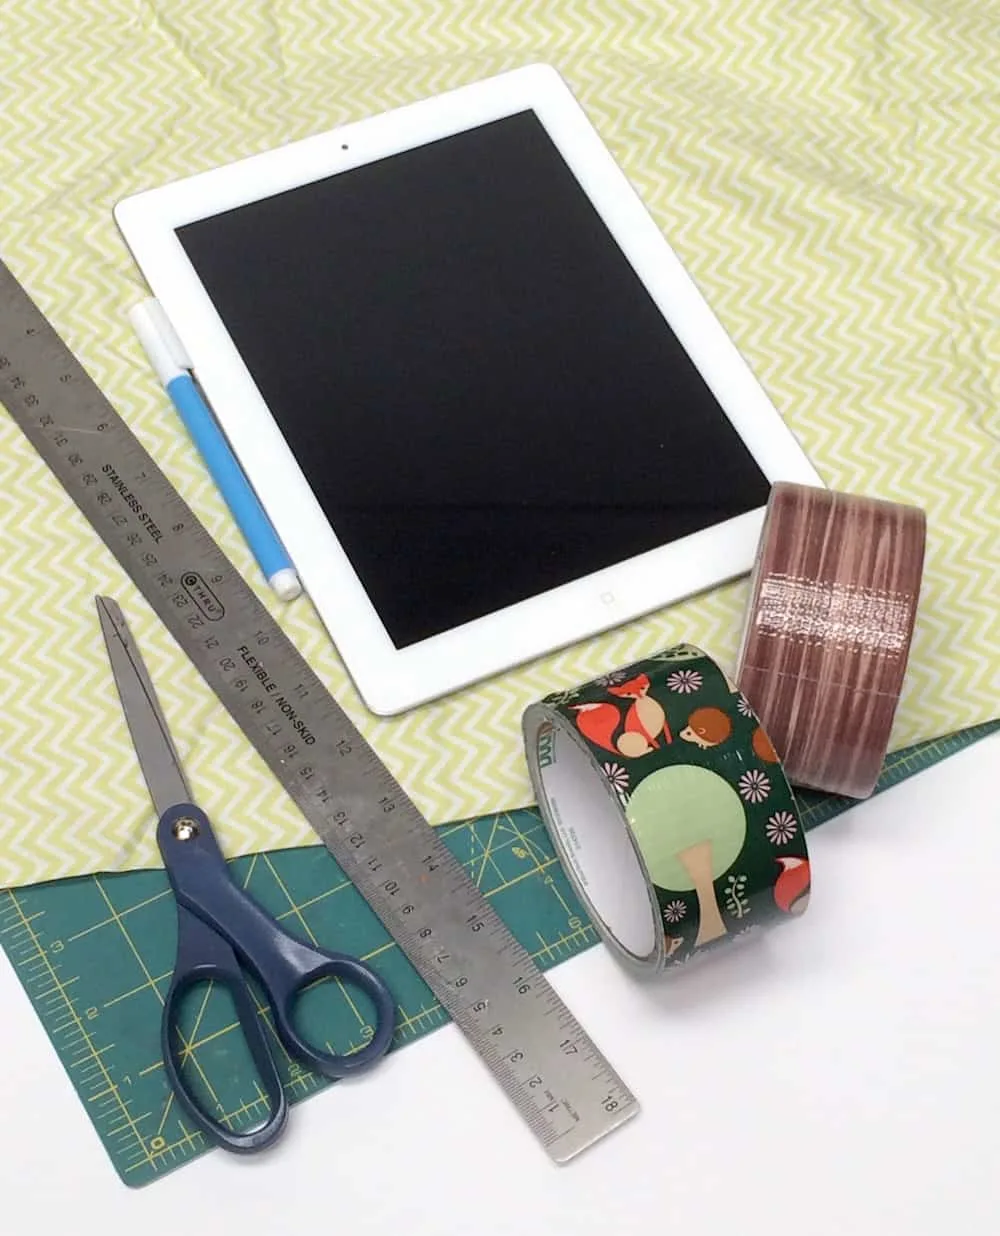 iPad, fabric, ruler, fabric marker, scissors, Duck Tape